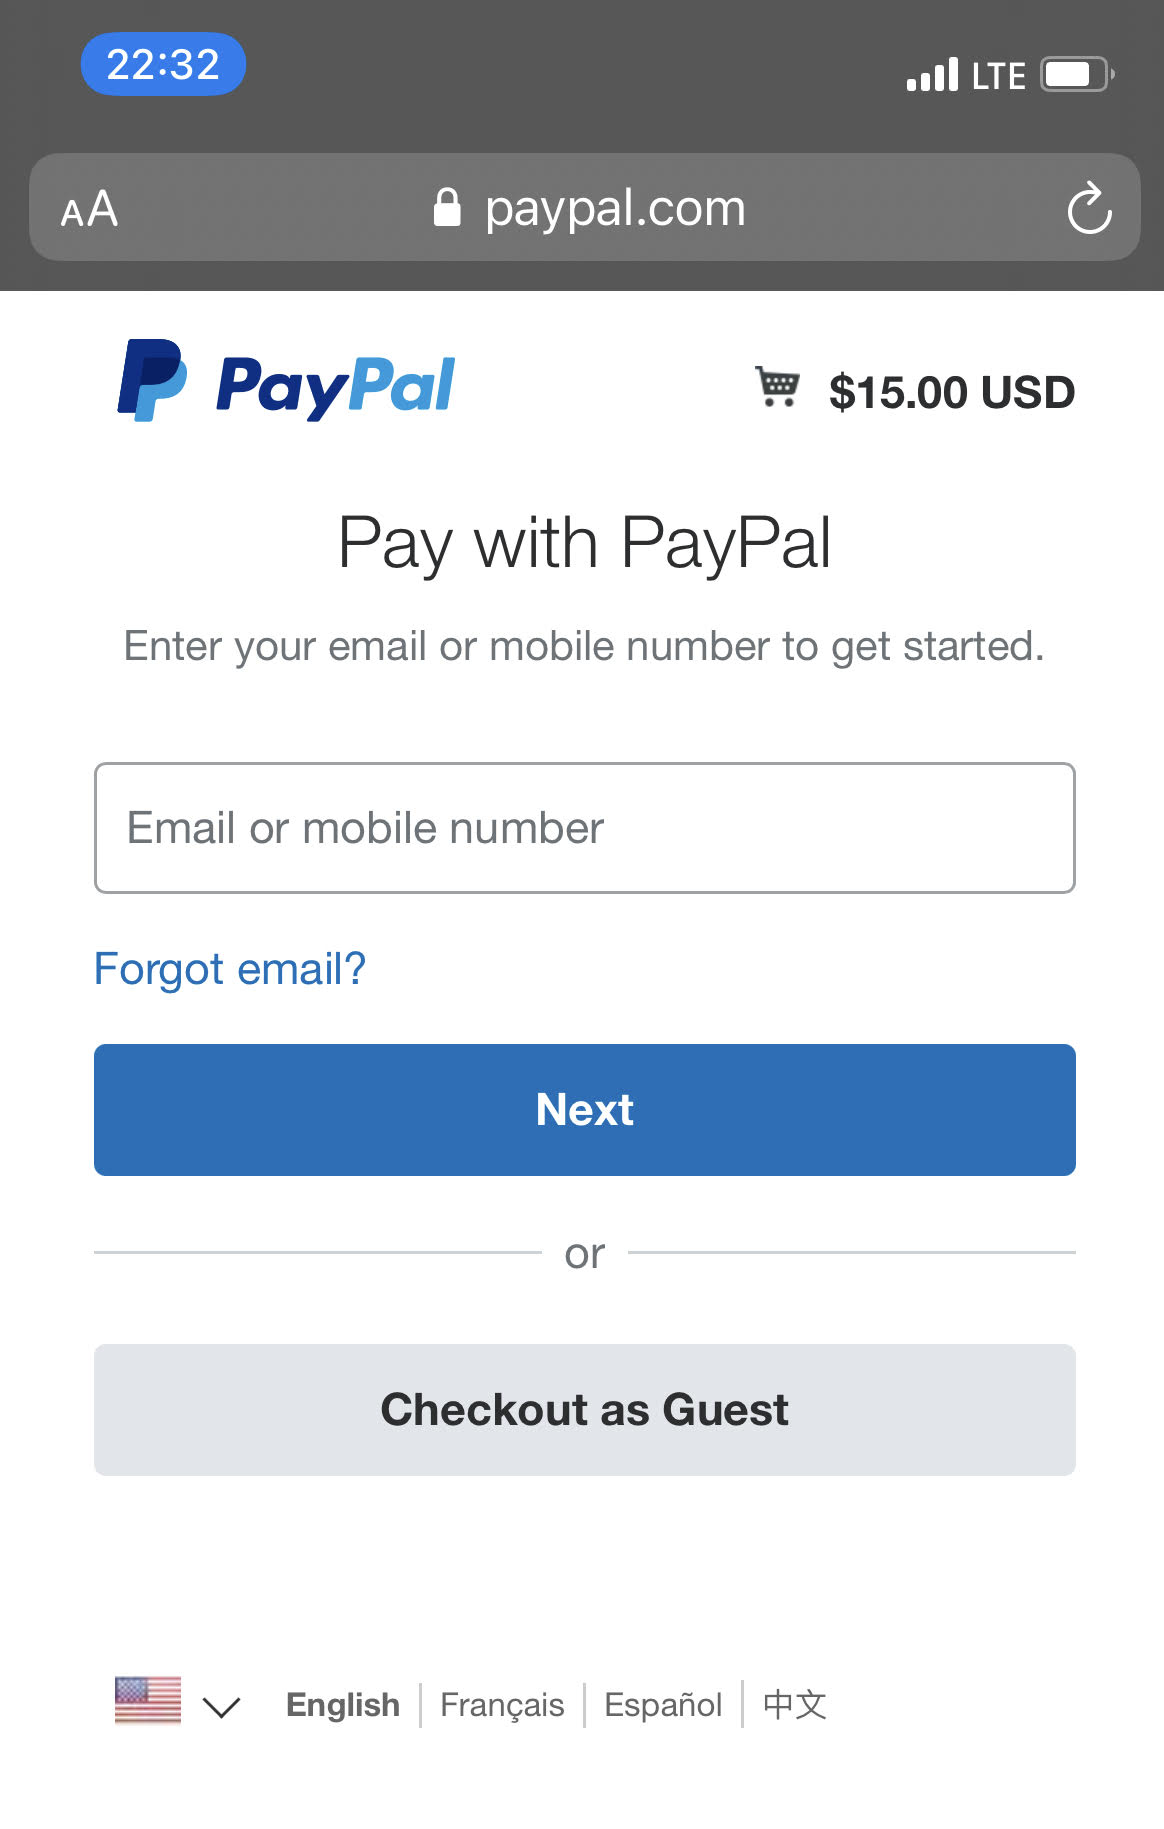 Paypal_QR_Code_landing_page.jpg